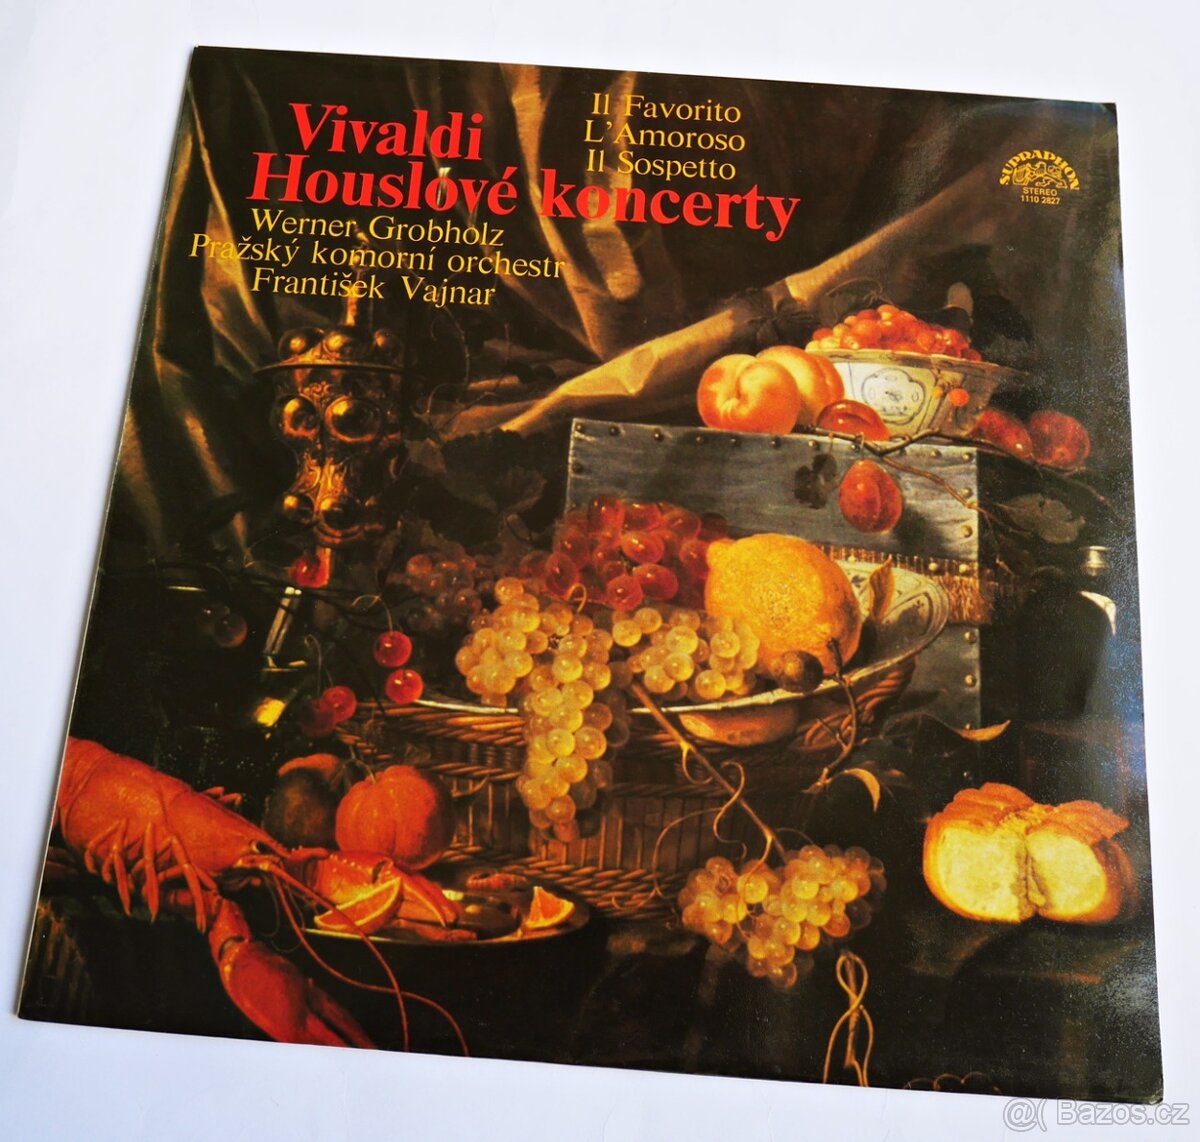 Vivaldi - Houslové Koncerty - Il Favorito (LP, CZE, 1981)